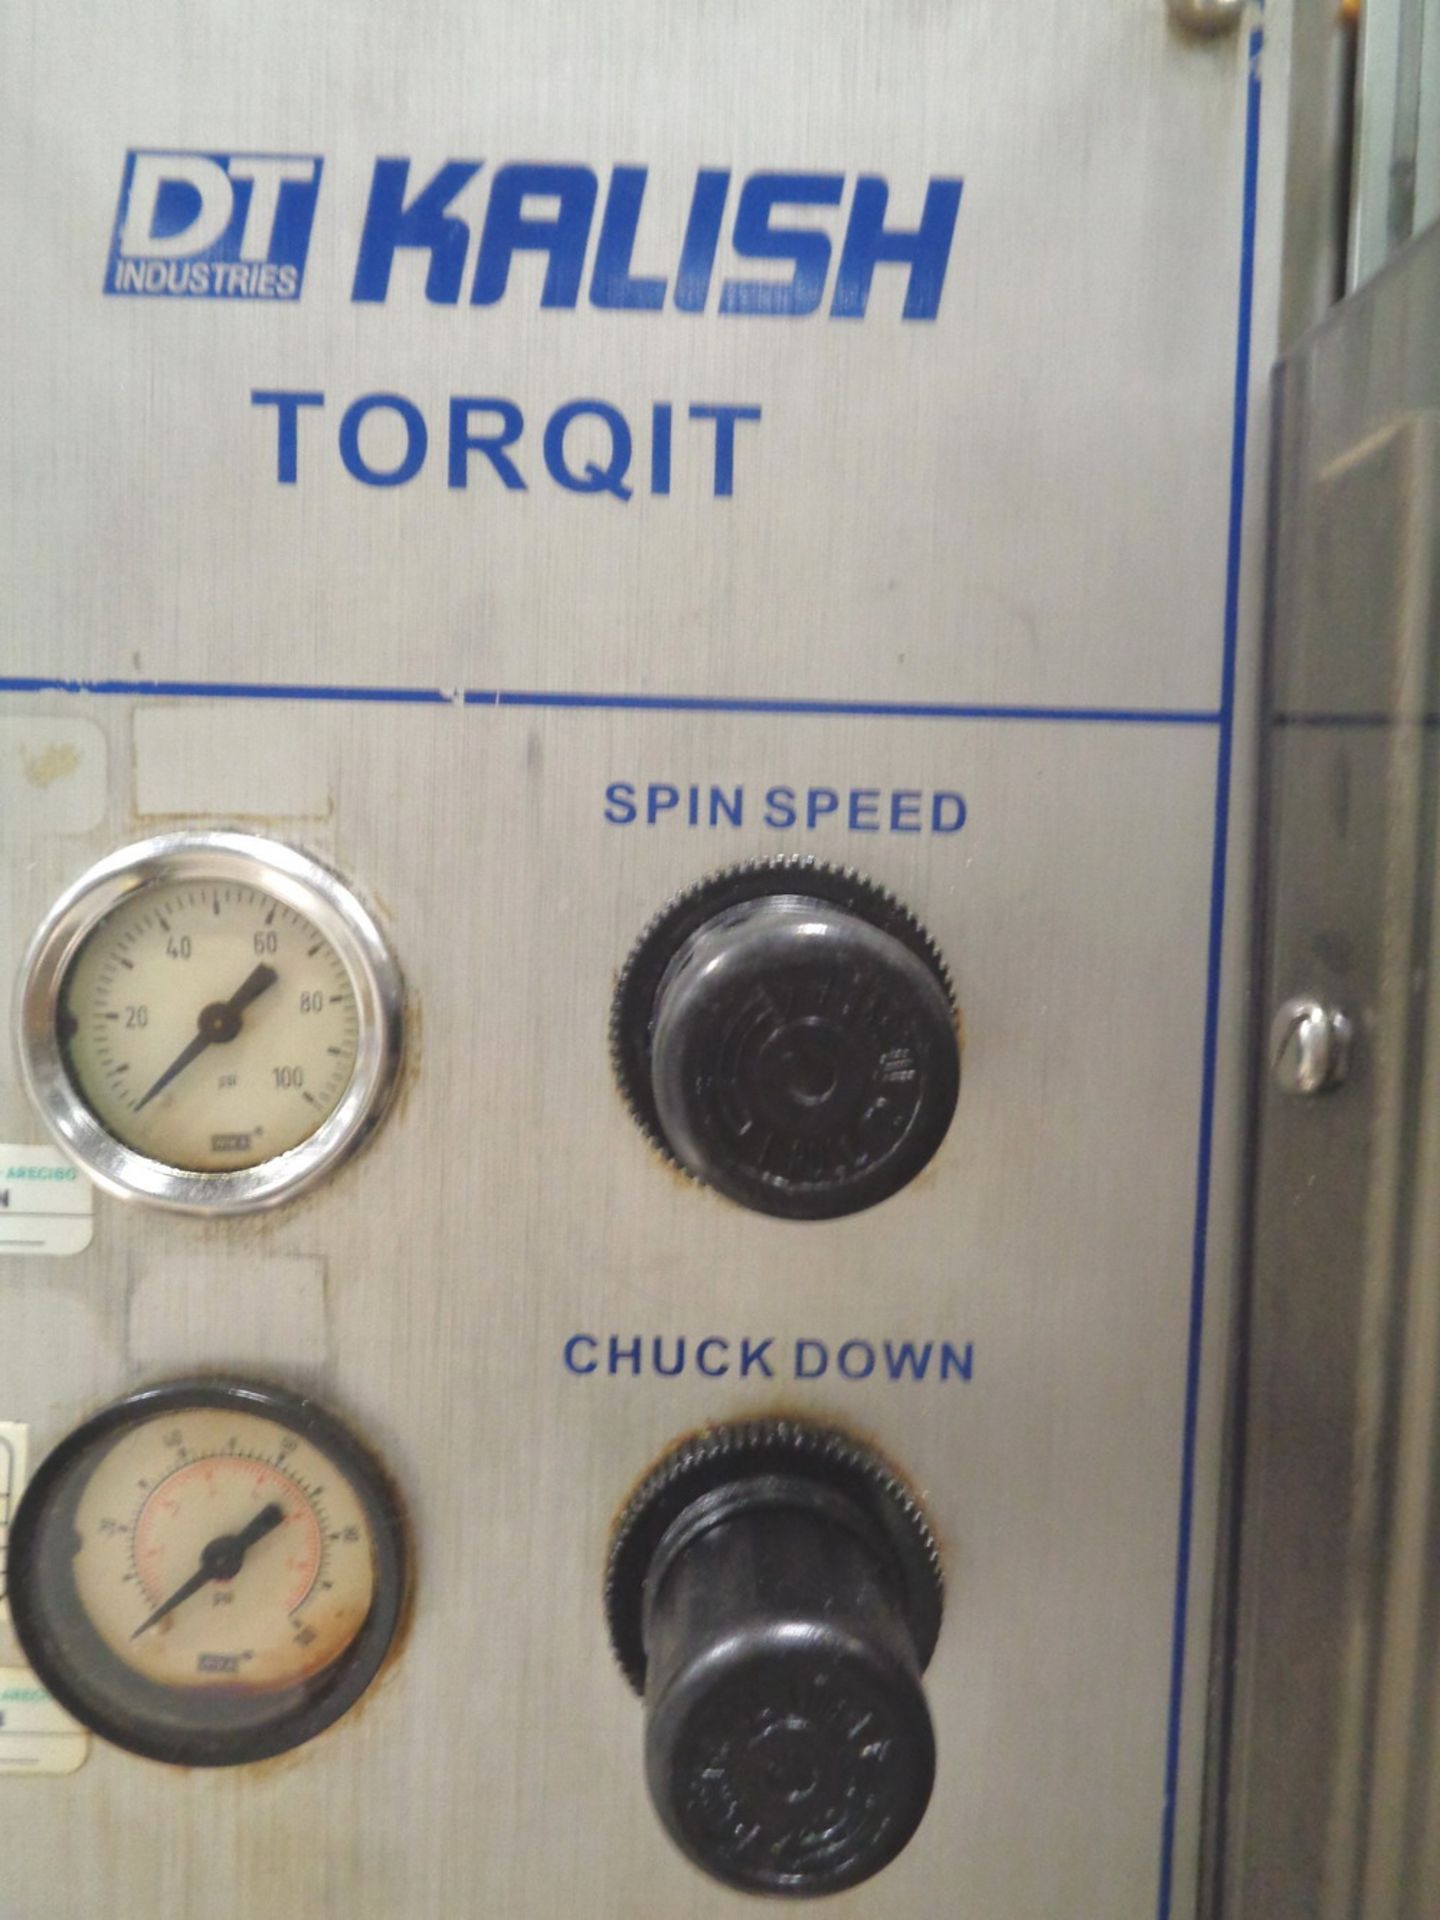 Kalish Automatic Cap Tightener/Torquing machine, Model Torqit - Image 4 of 7